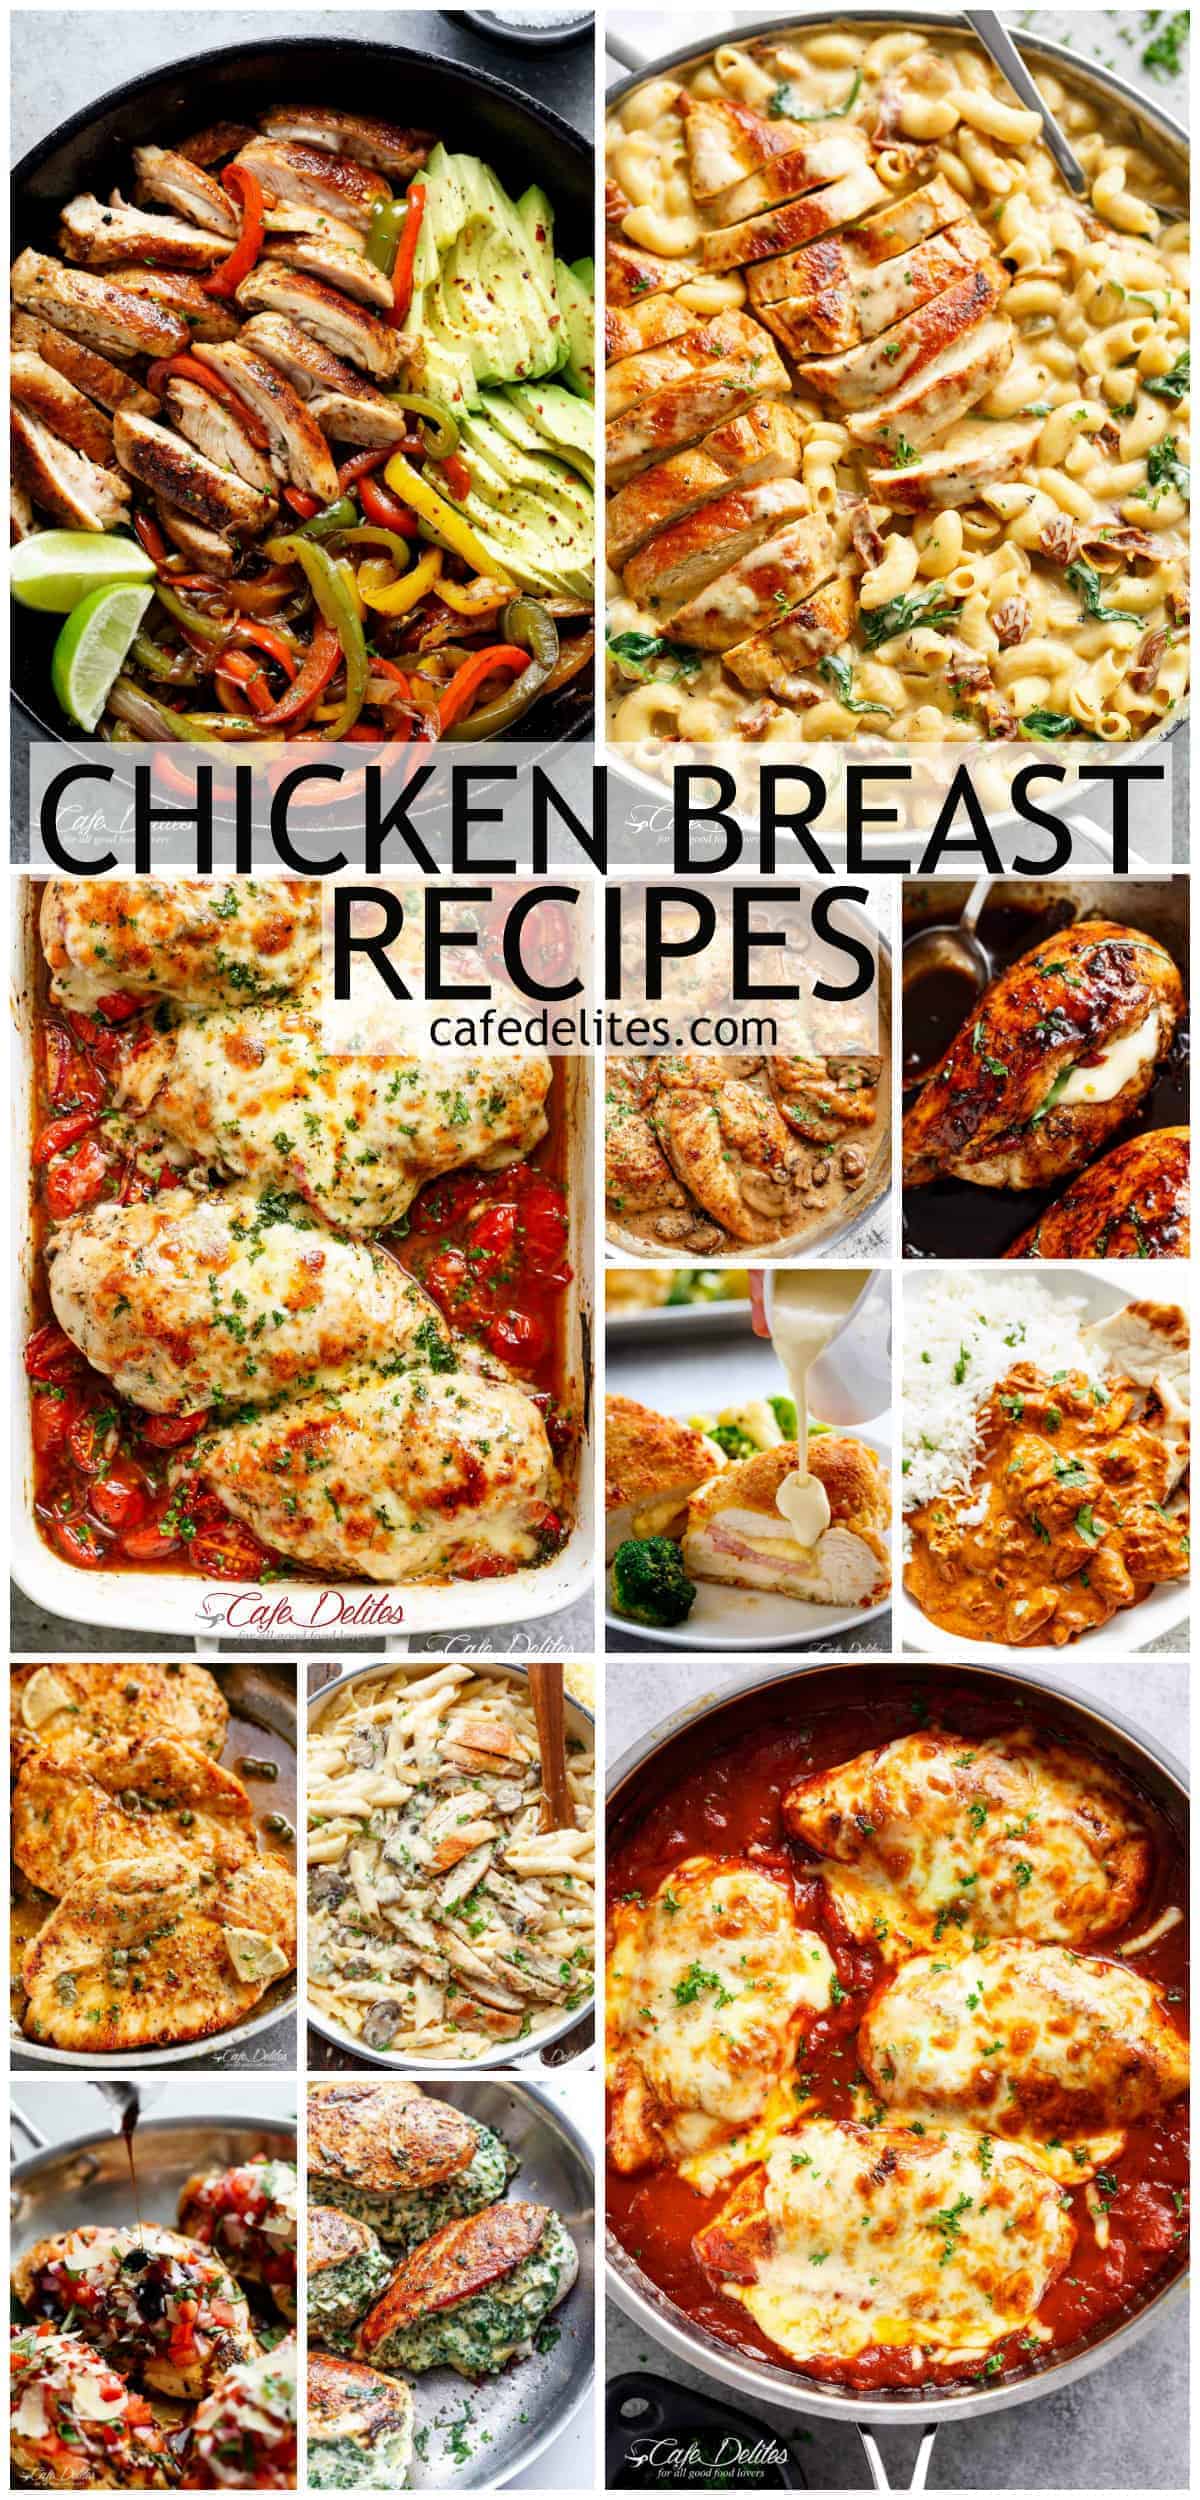 Chicken Breast Recipes - Cafe Delites